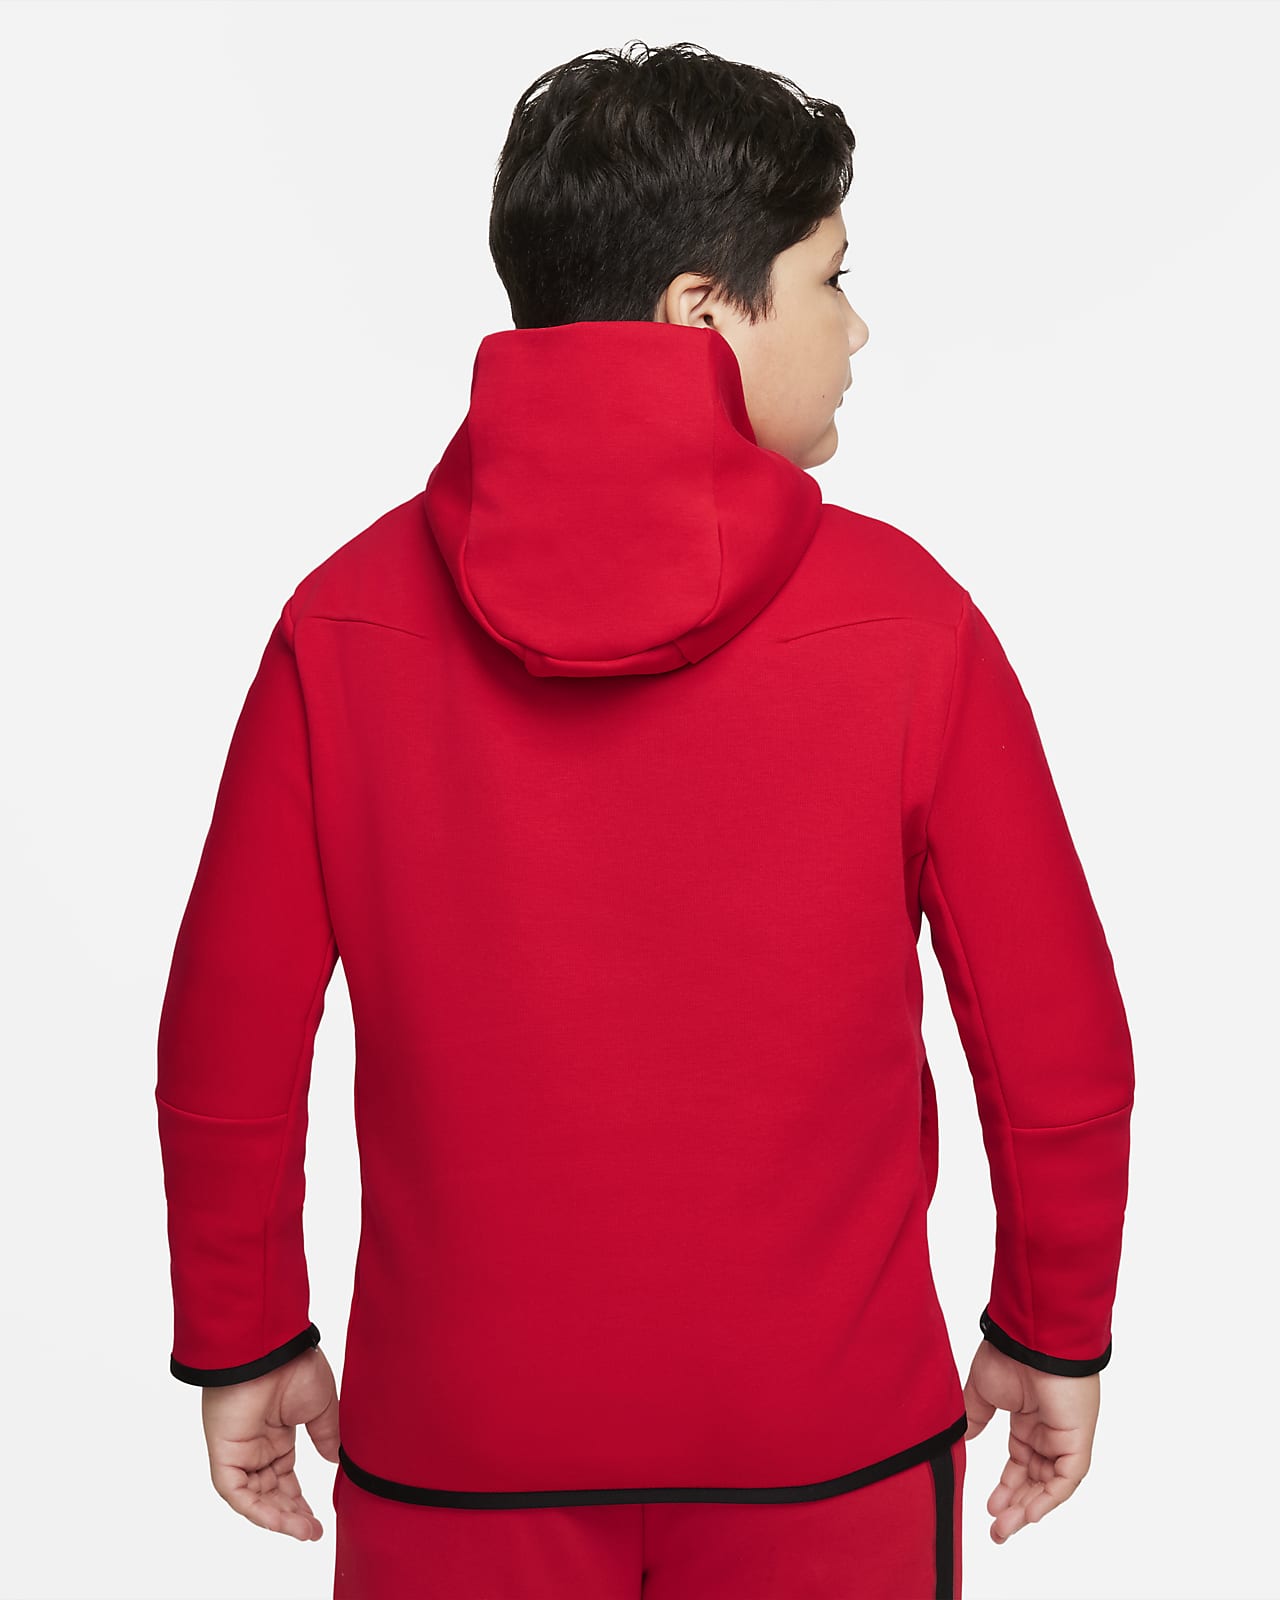 boys red nike jacket,Cheap,Sell,OFF 61%,www.araldicavini.it